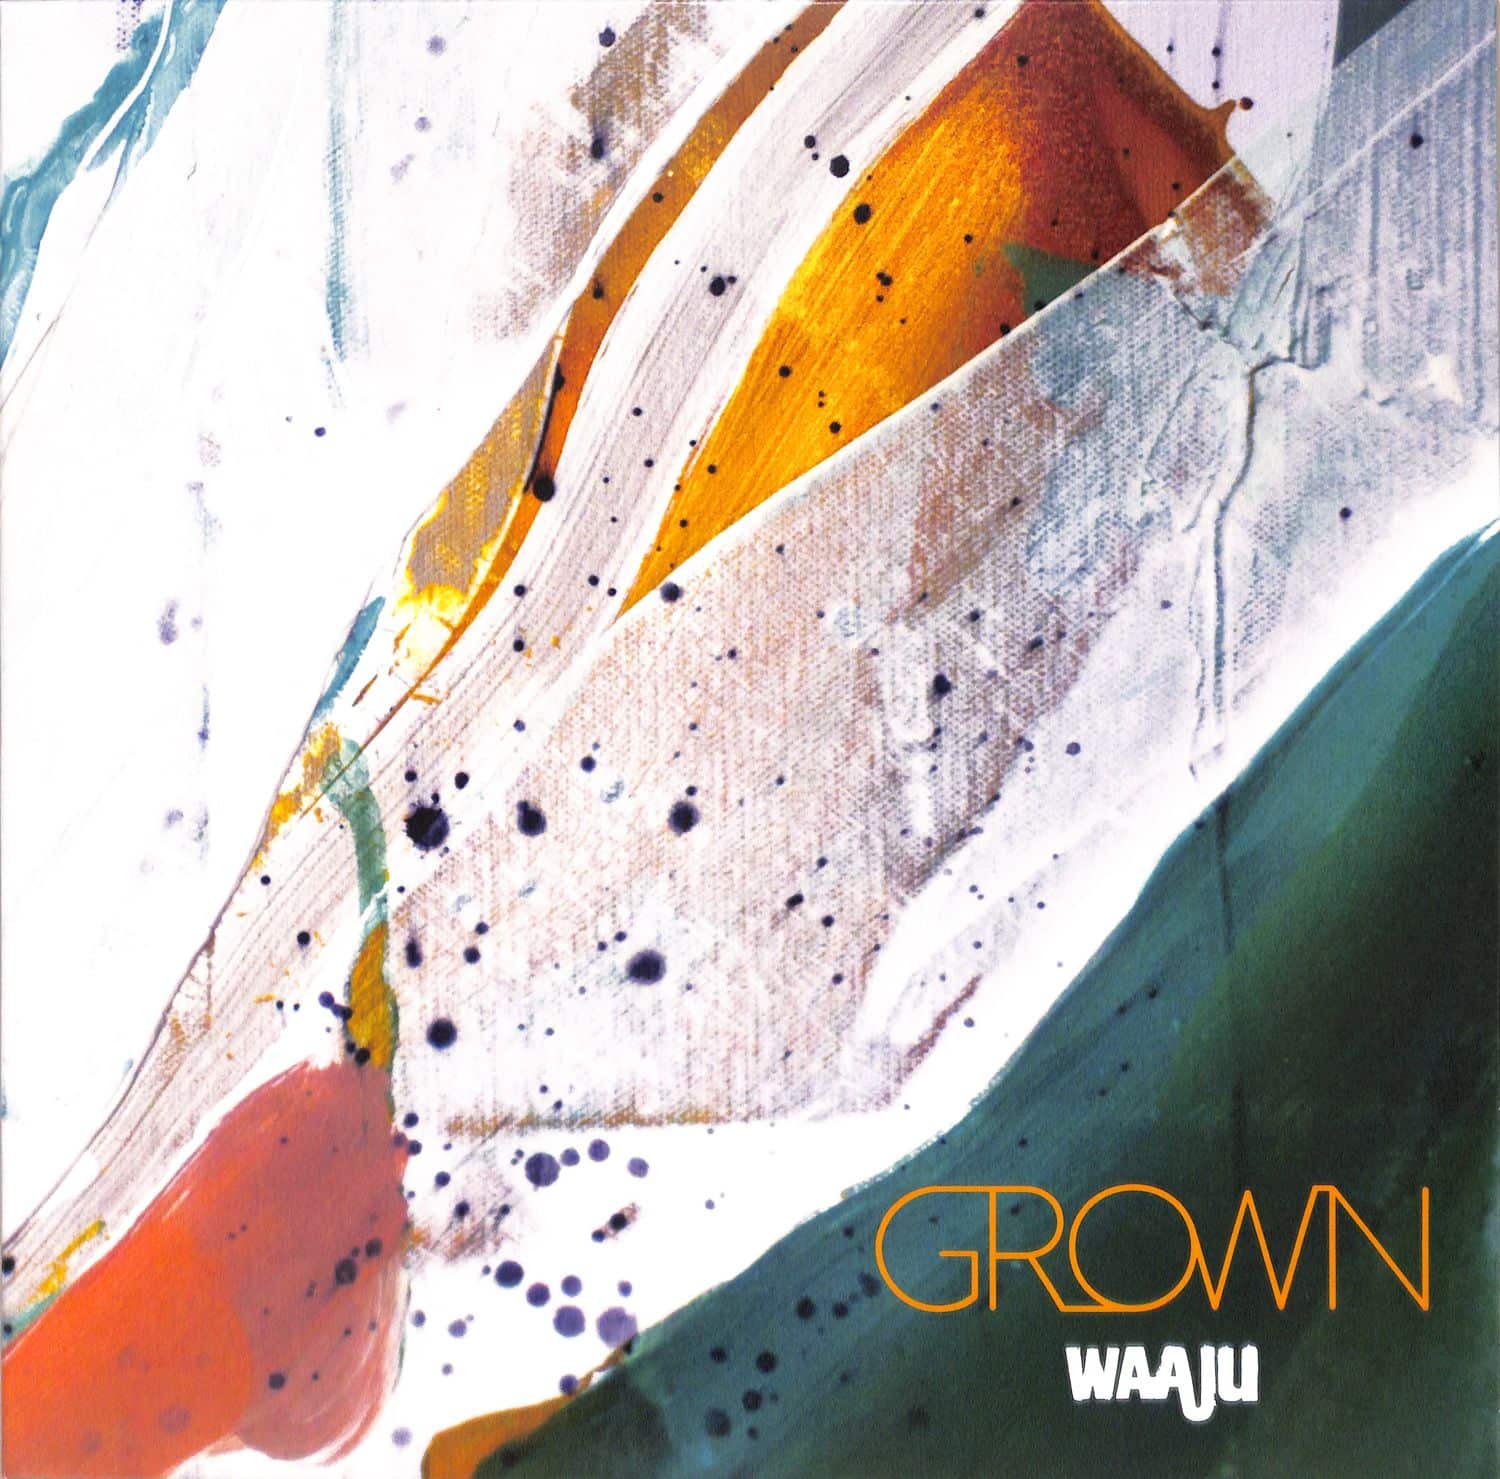 Waaju - GROWN 